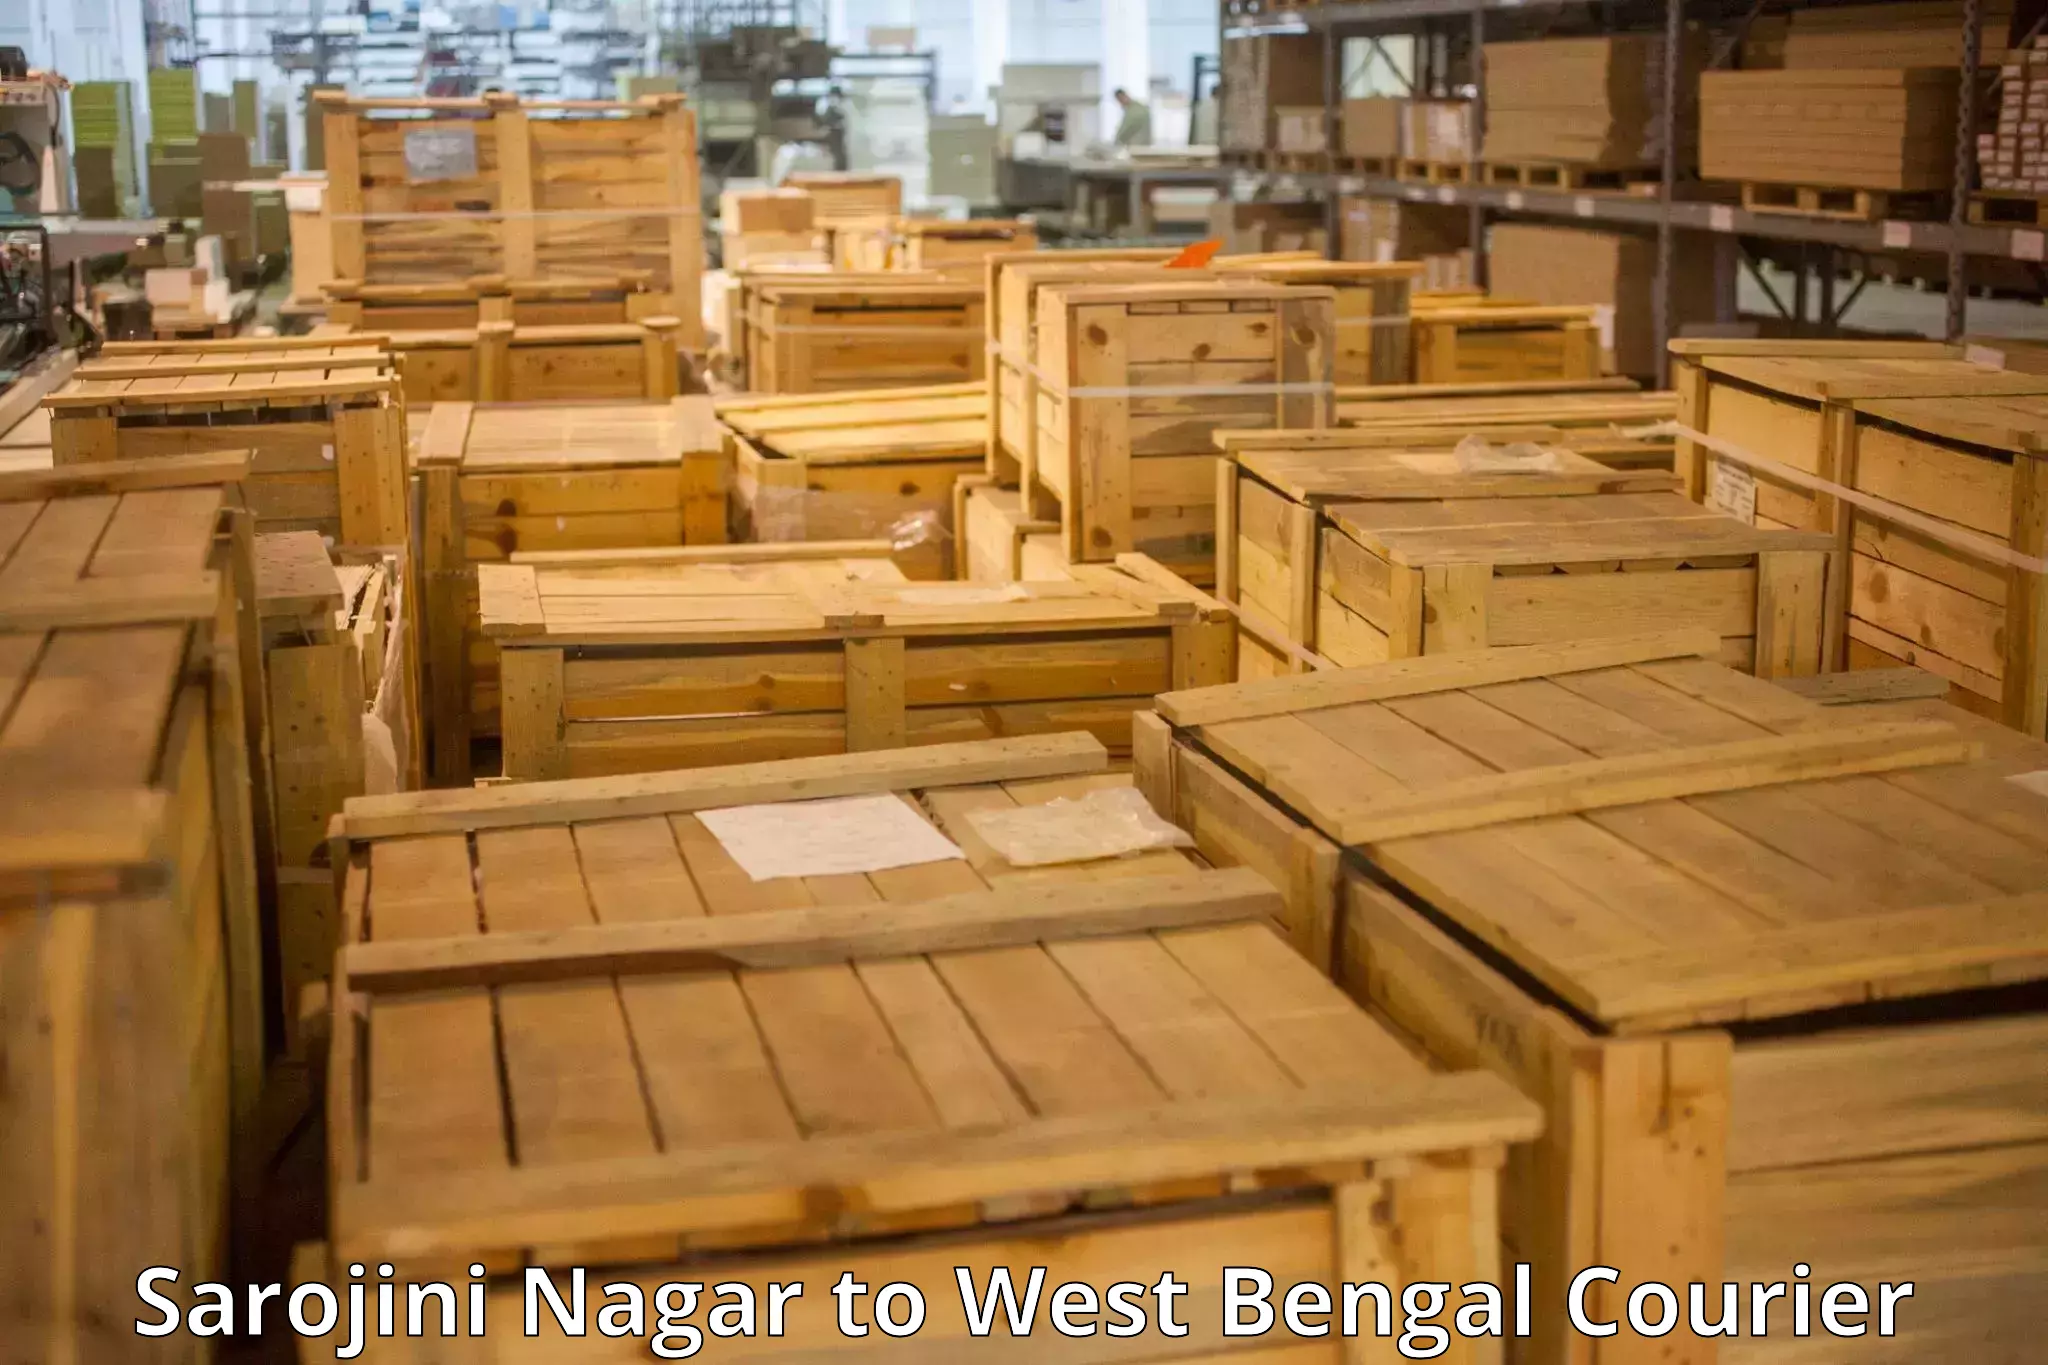 Luggage shipment specialists Sarojini Nagar to Kolkata Port